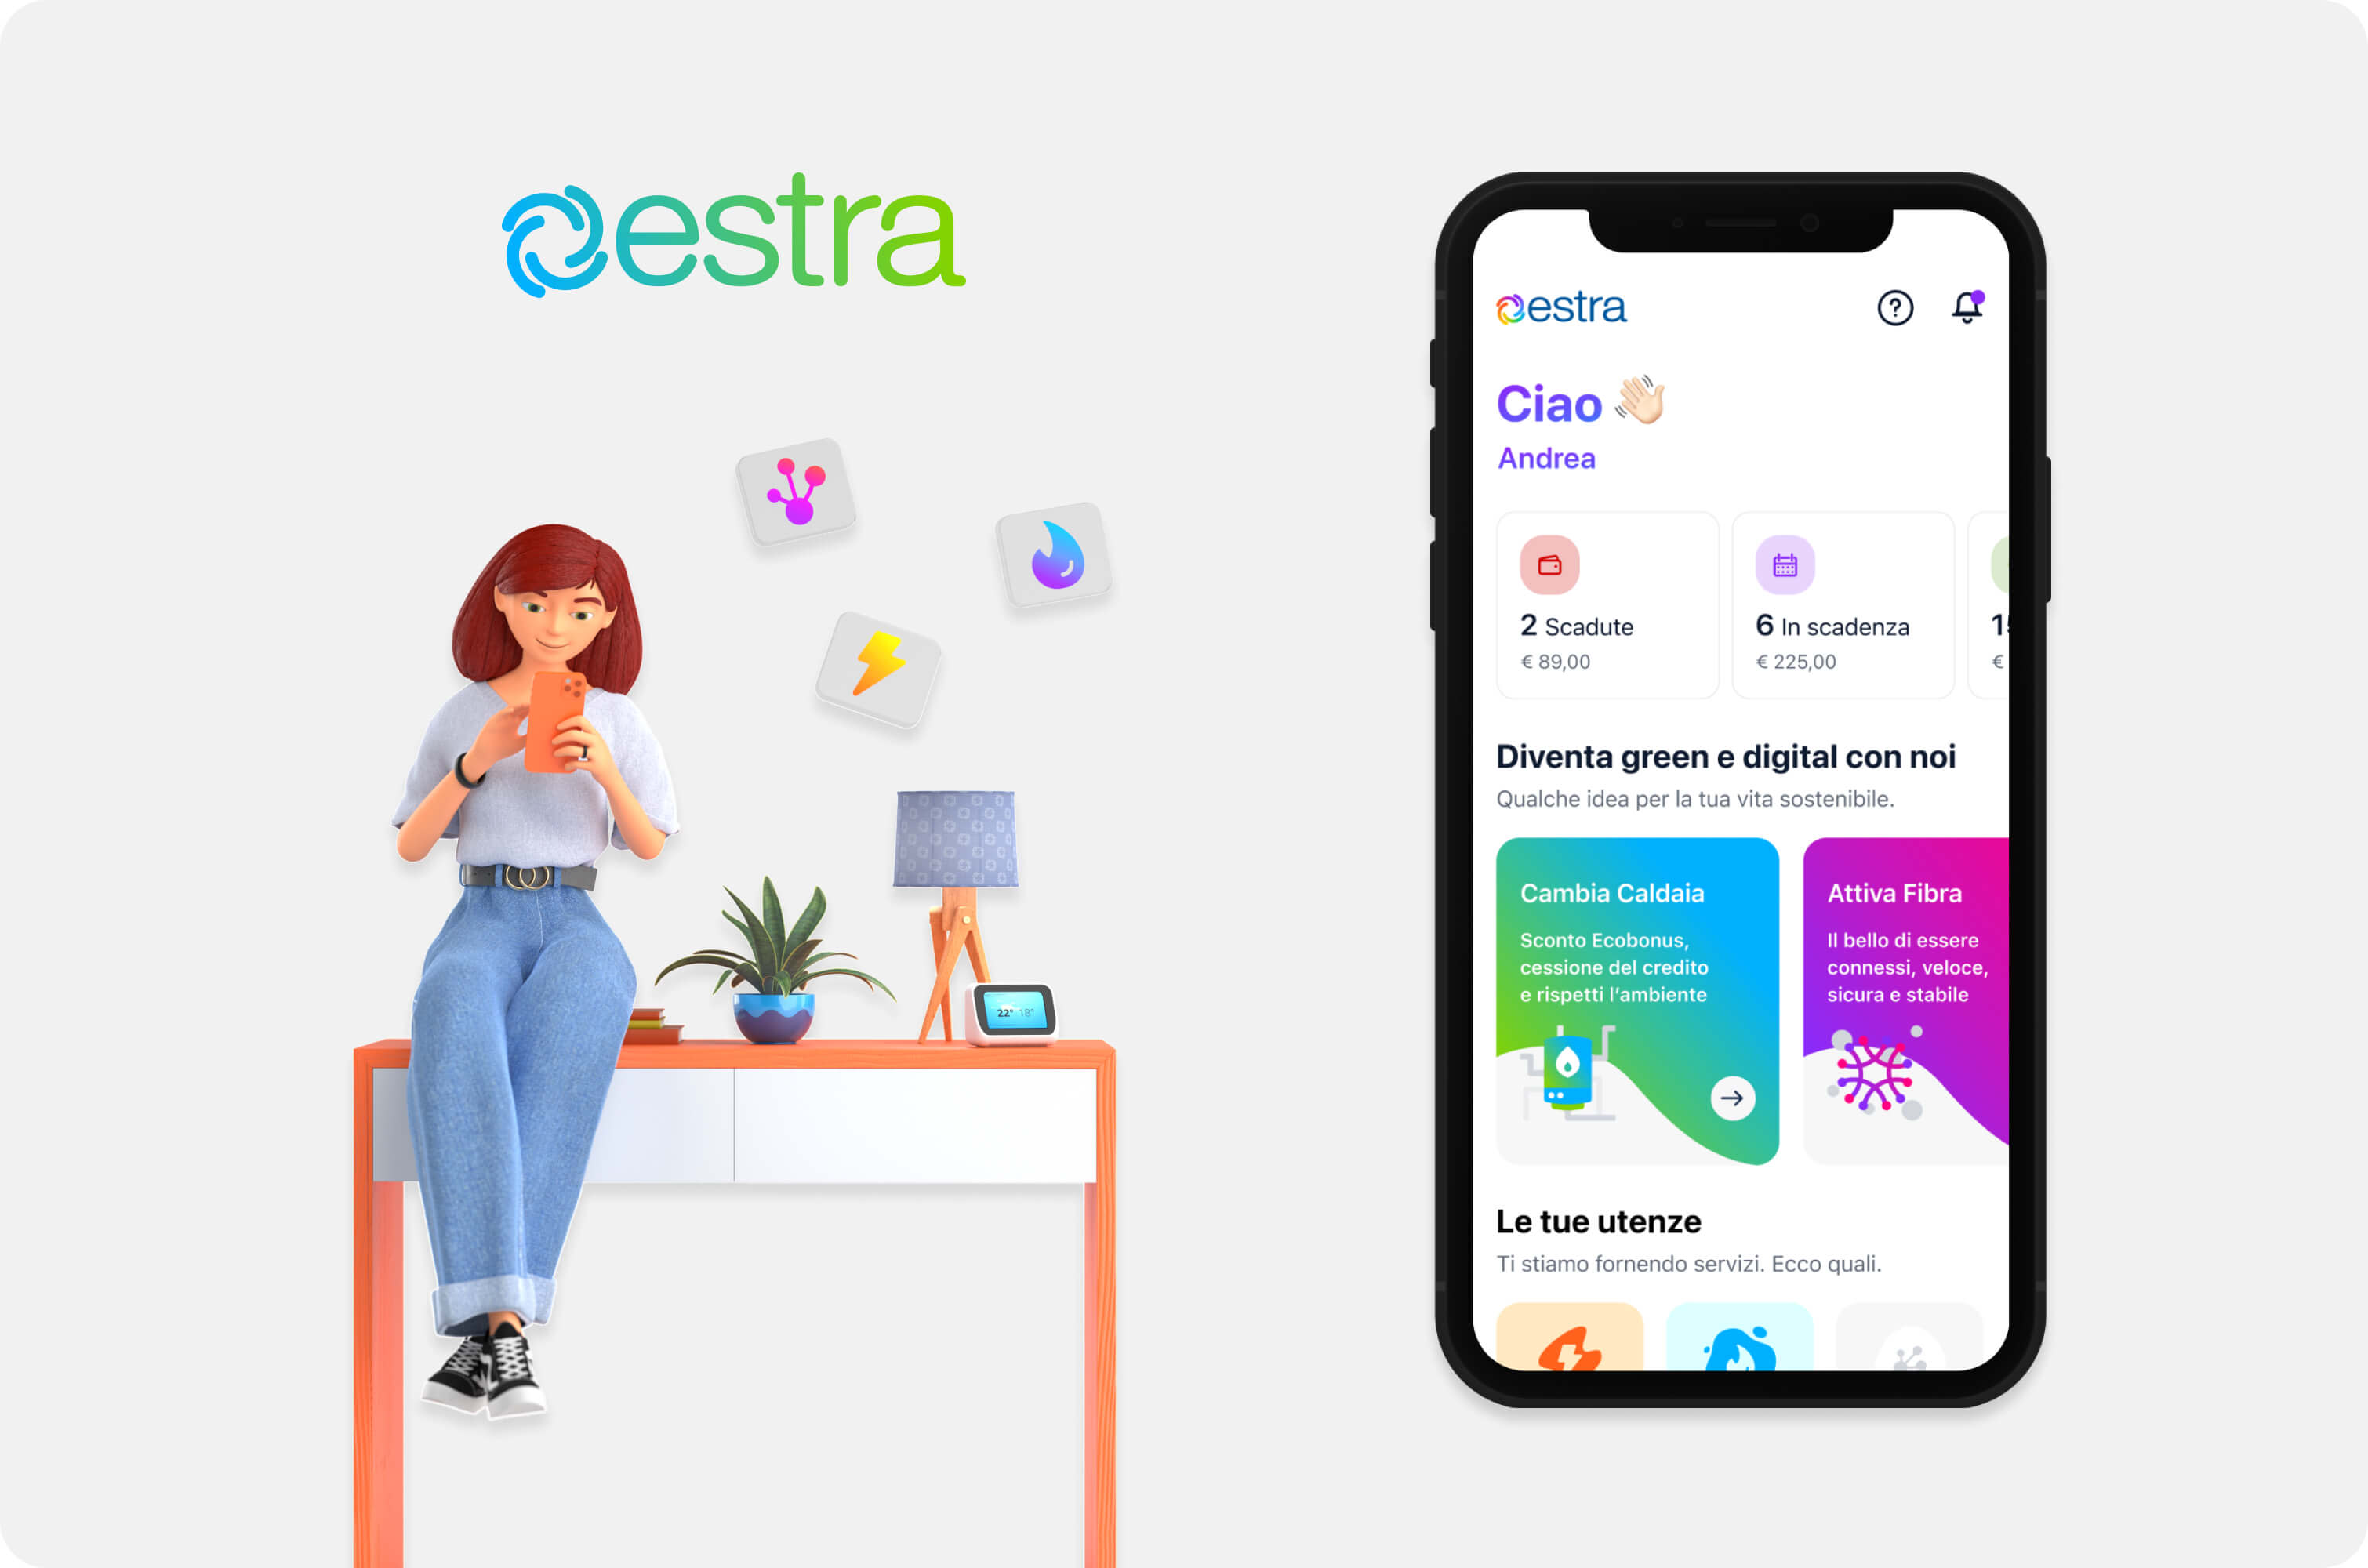 A screenshot of the Estra app